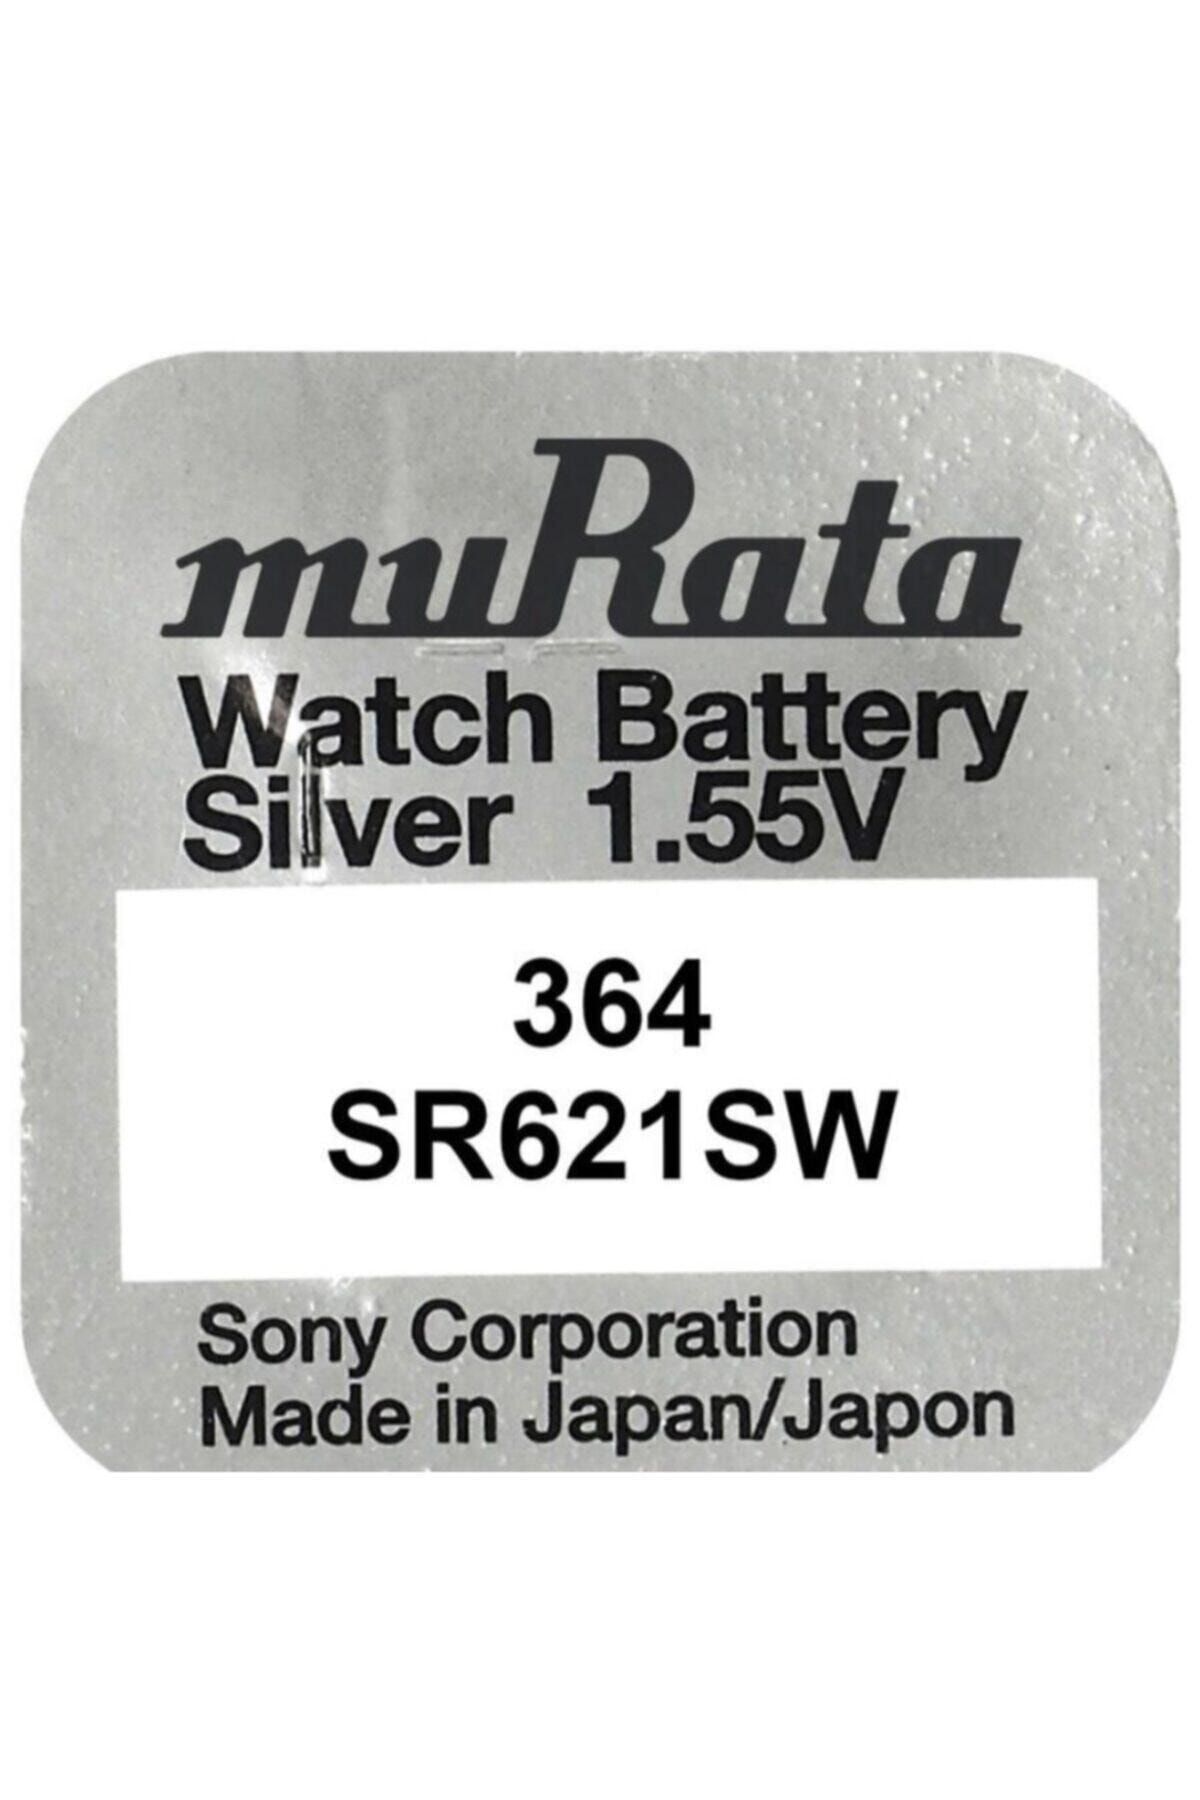 Murata Pila de botón SR 621SW / 364, 0% Mercurio